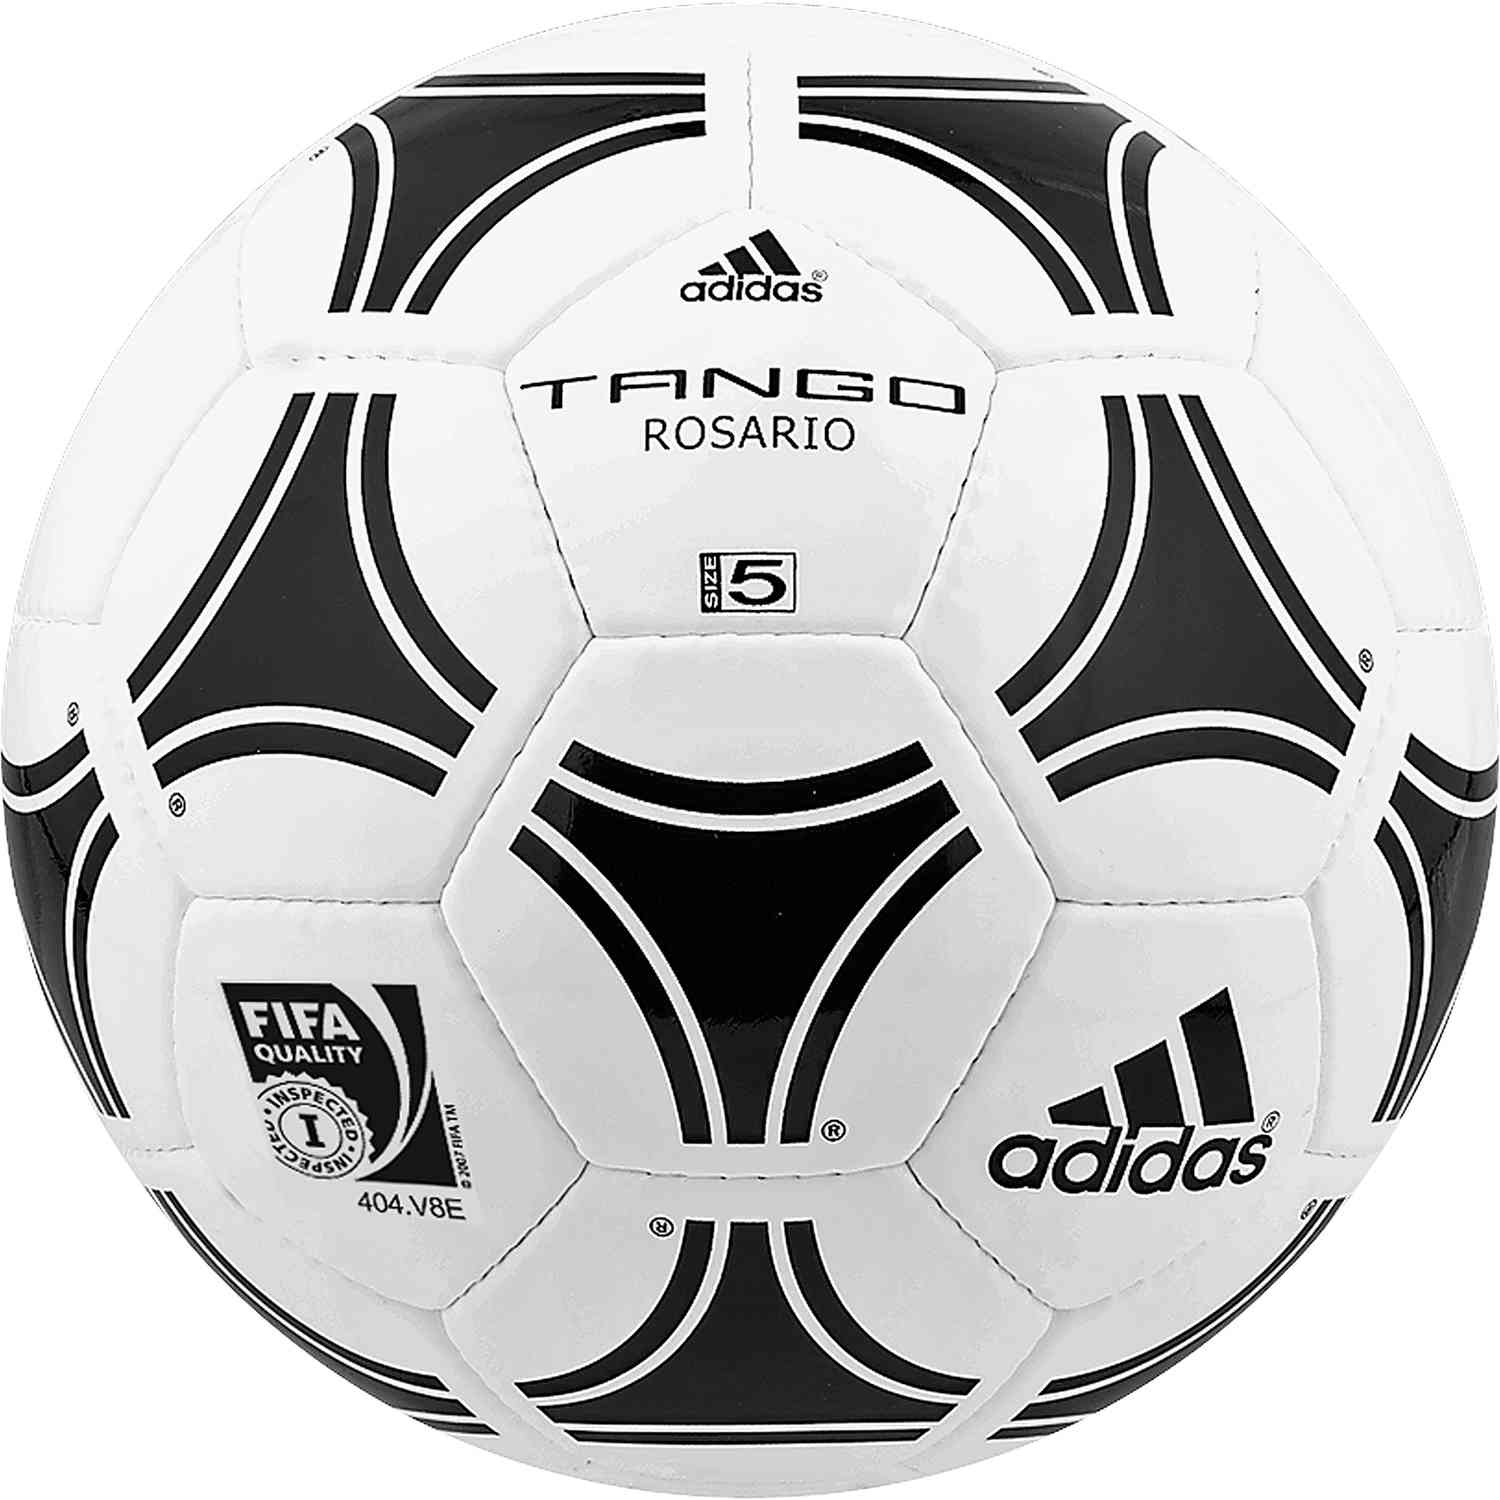 Adidas Tango Soccer Ball, Tango Rosario Soccer Ball from Adidas @  SoccerPro.com